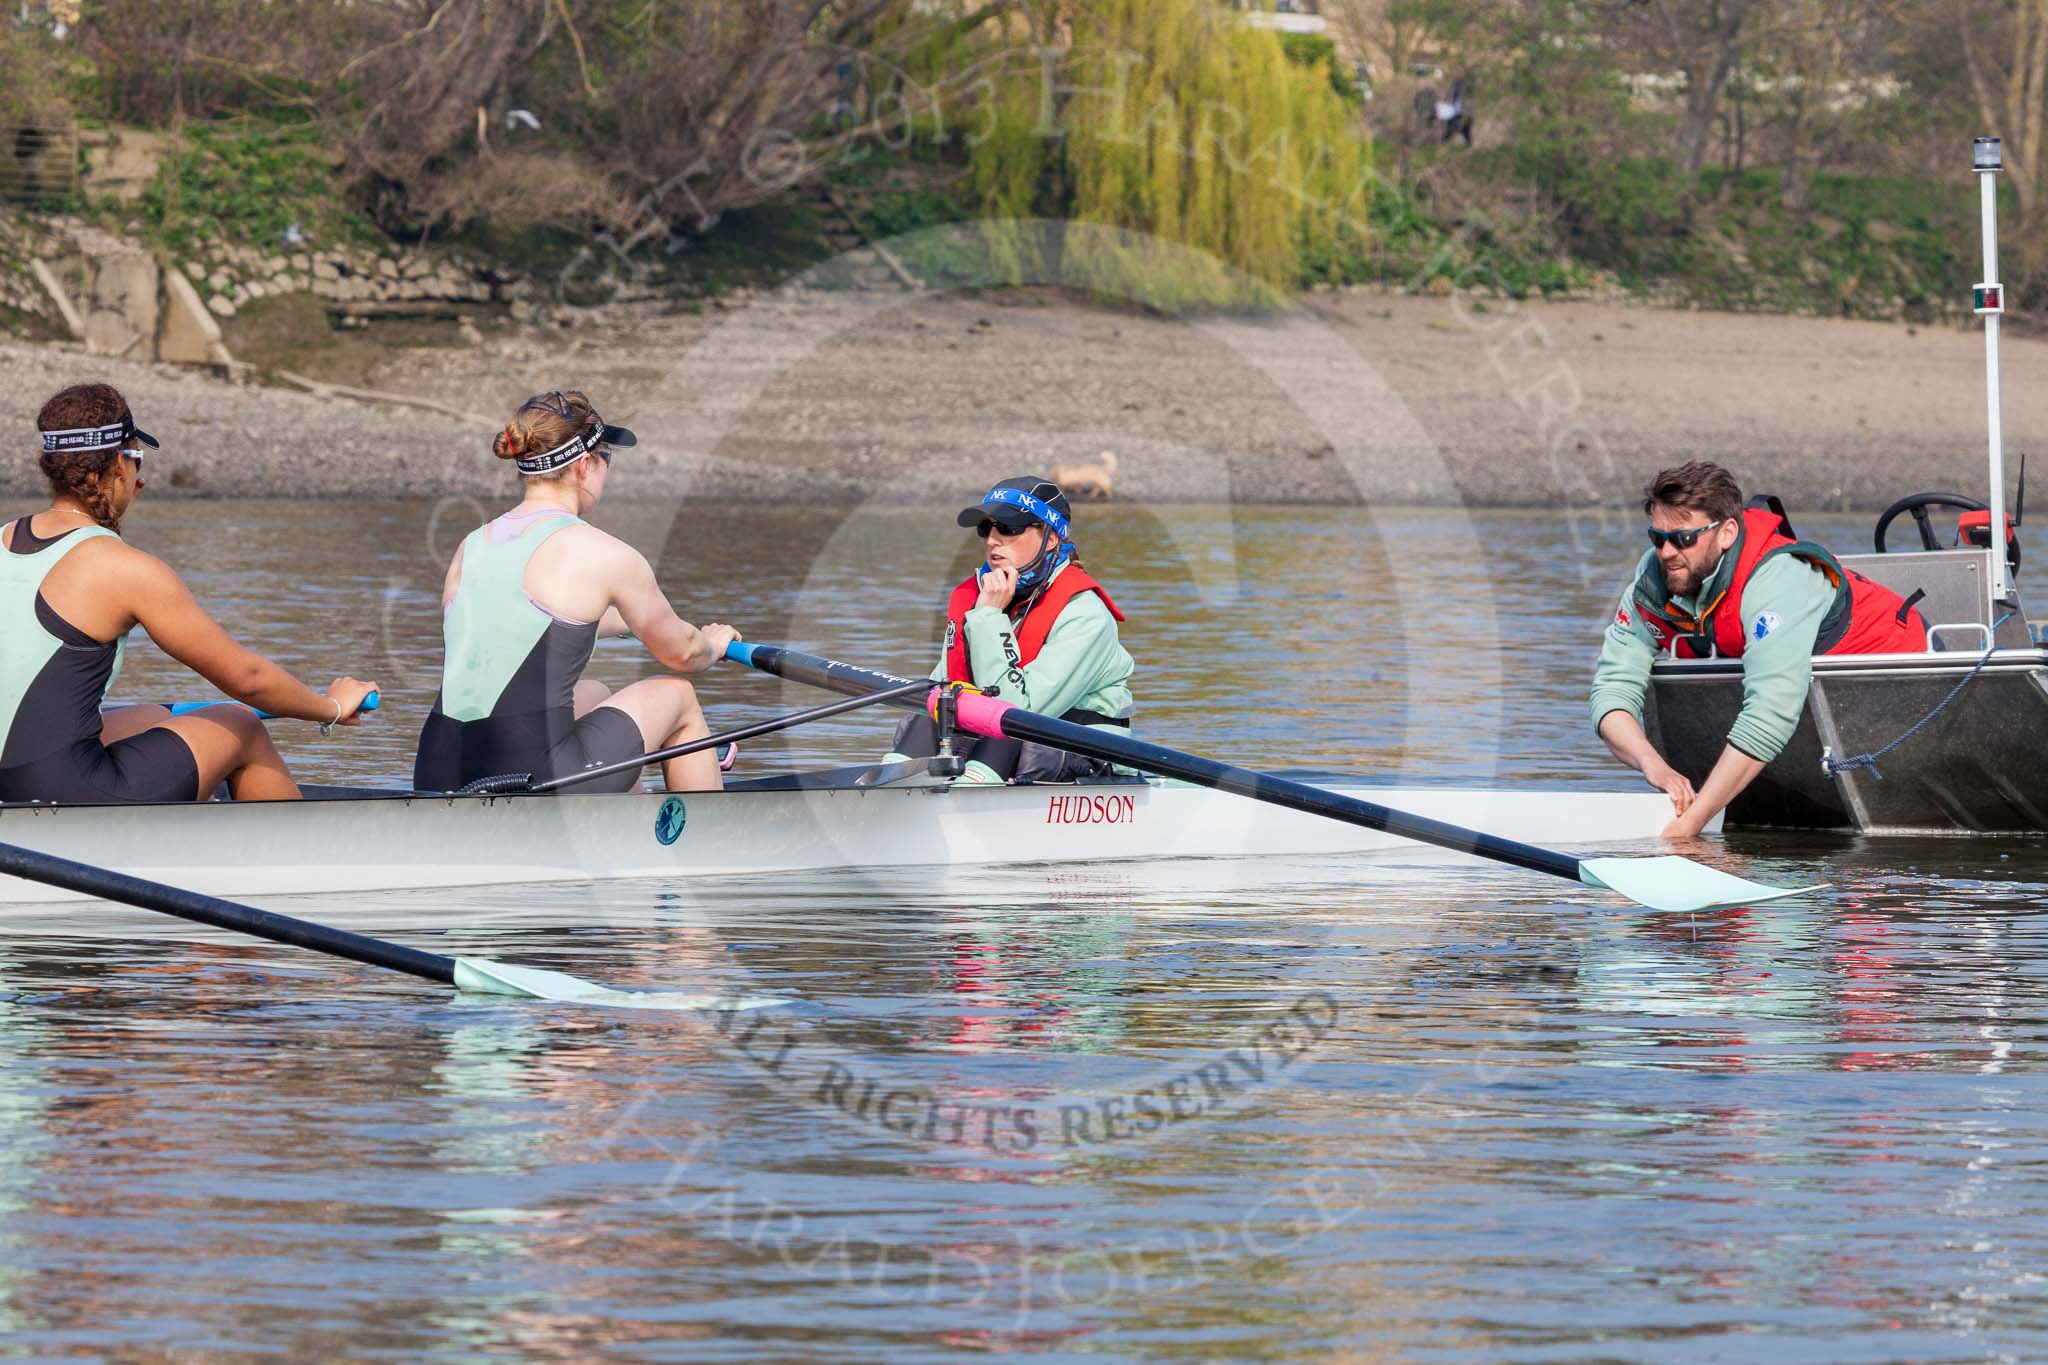 The Boat Race season 2015 - Tideway Week.
River Thames between Putney and Mortlake,
London,

United Kingdom,
on 08 April 2015 at 10:39, image #86